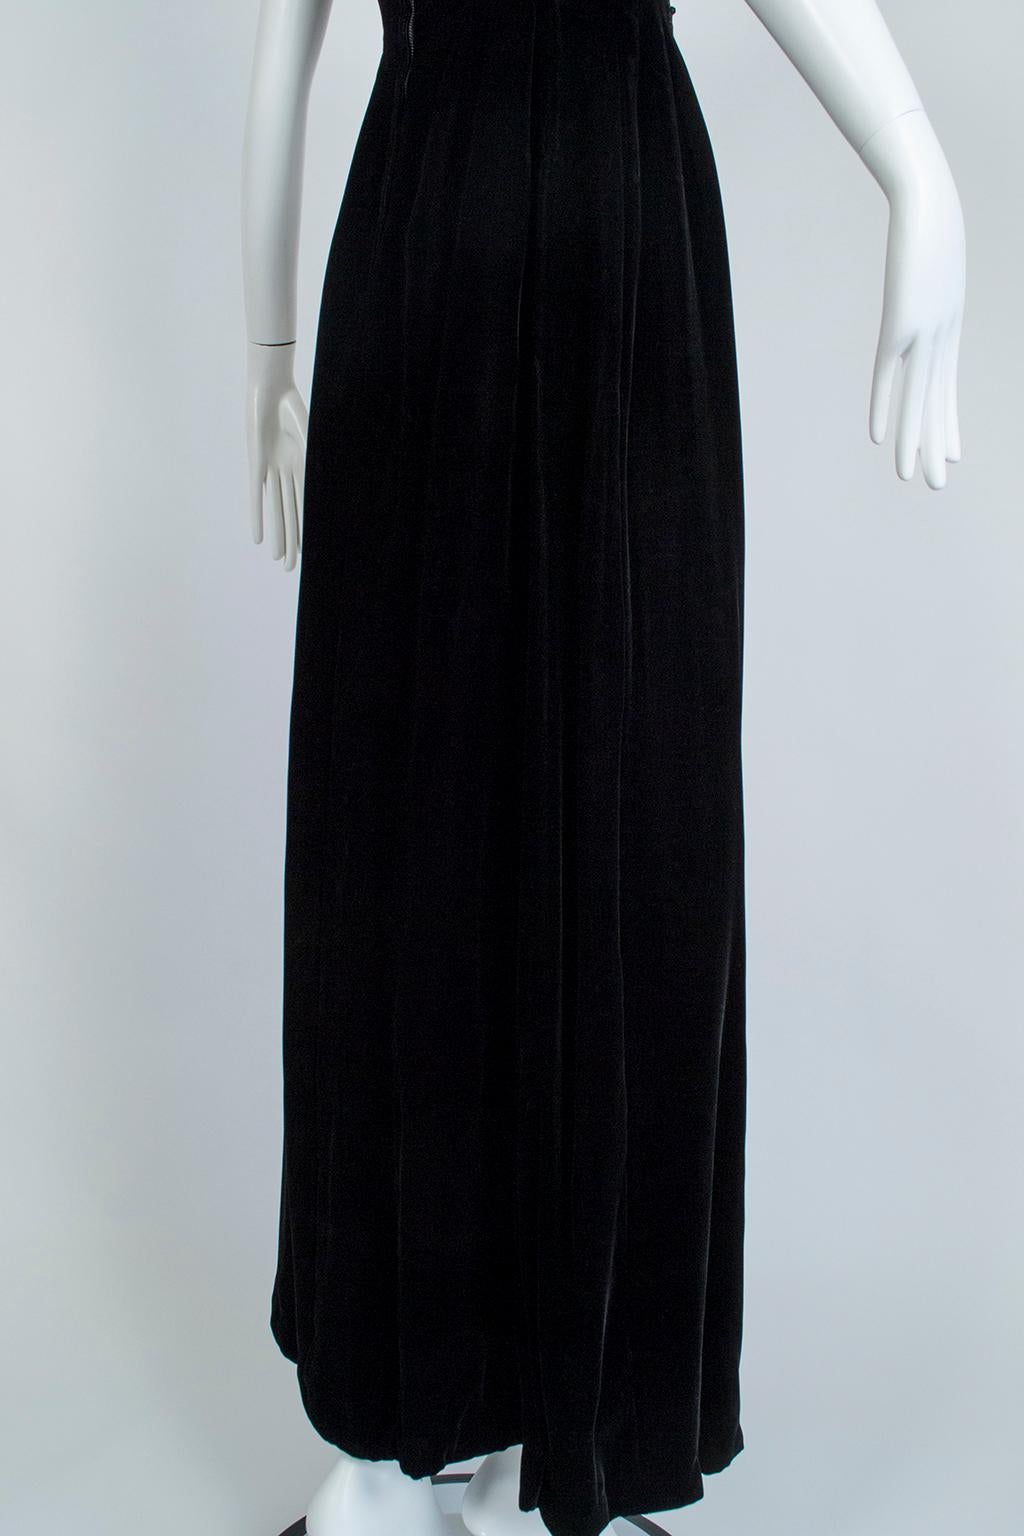 Black Silk Velvet Imperialist Chandelier Bead and Passementerie Gown–XS-S, 1950s For Sale 6